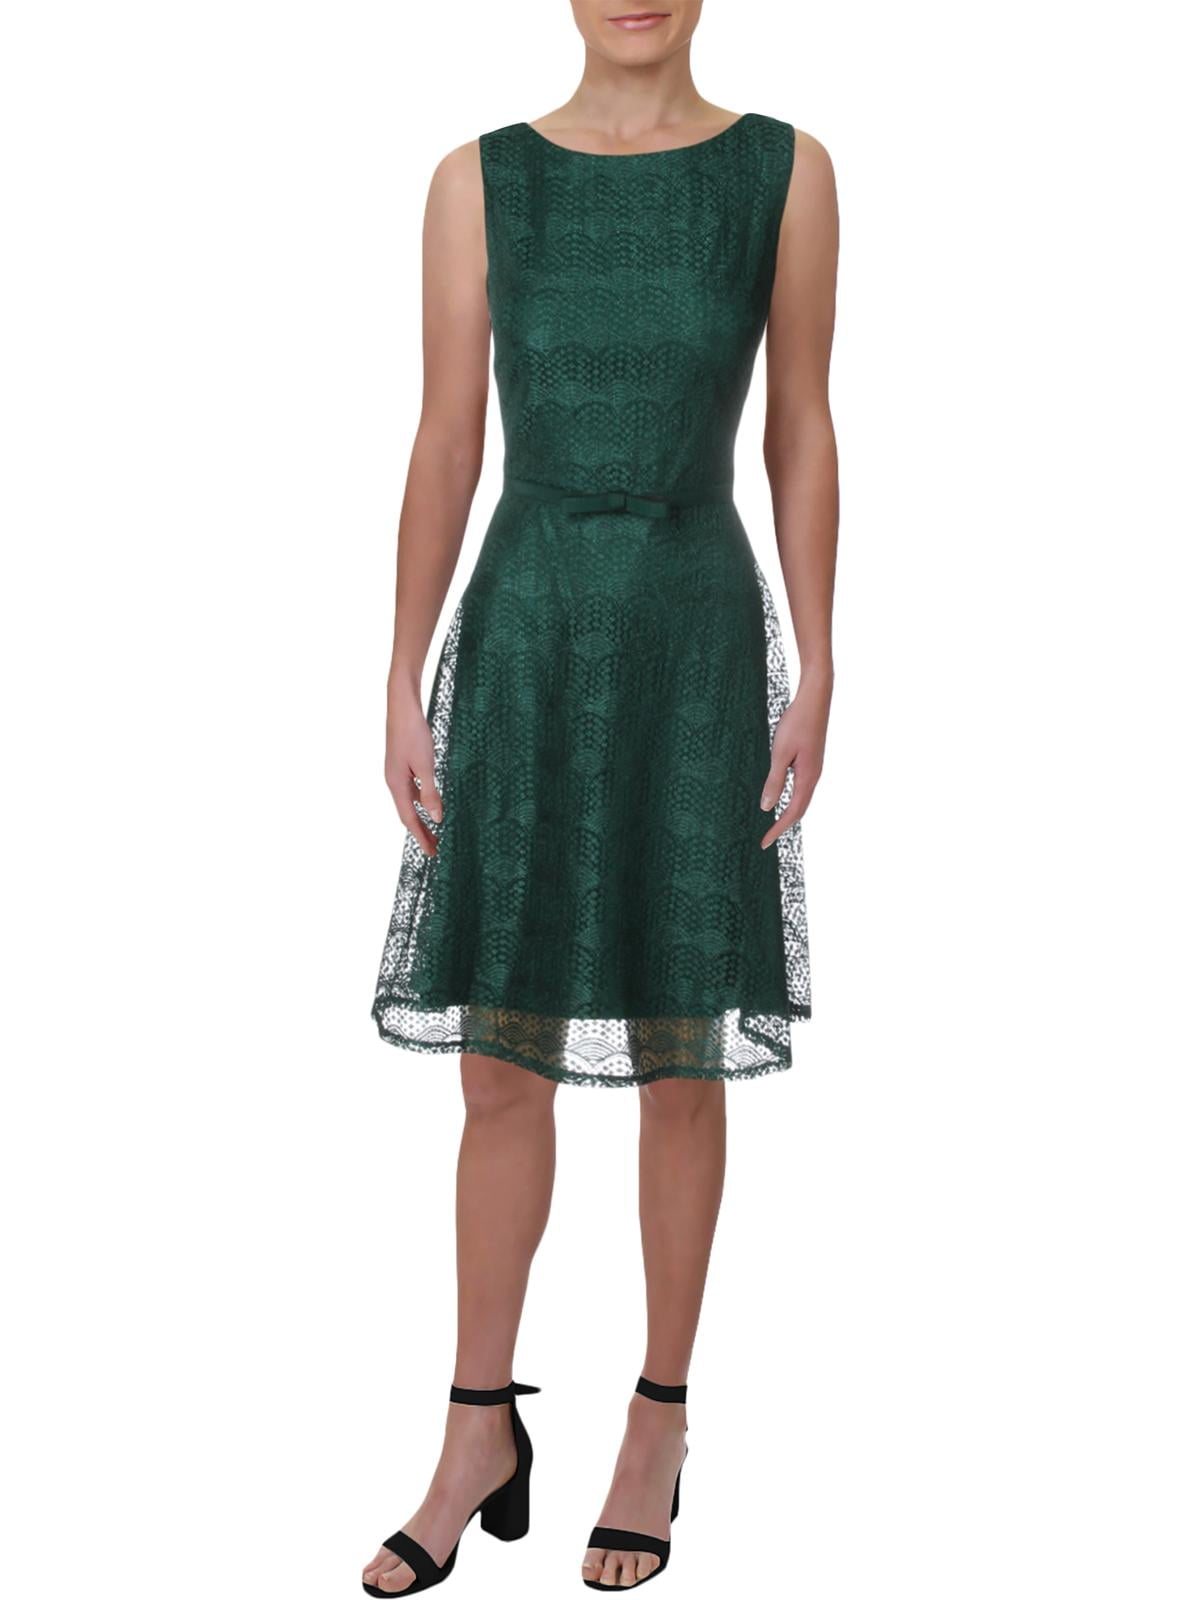 Gabby Skye - Gabby Skye Womens Lace A-Line Party Dress - Walmart.com ...